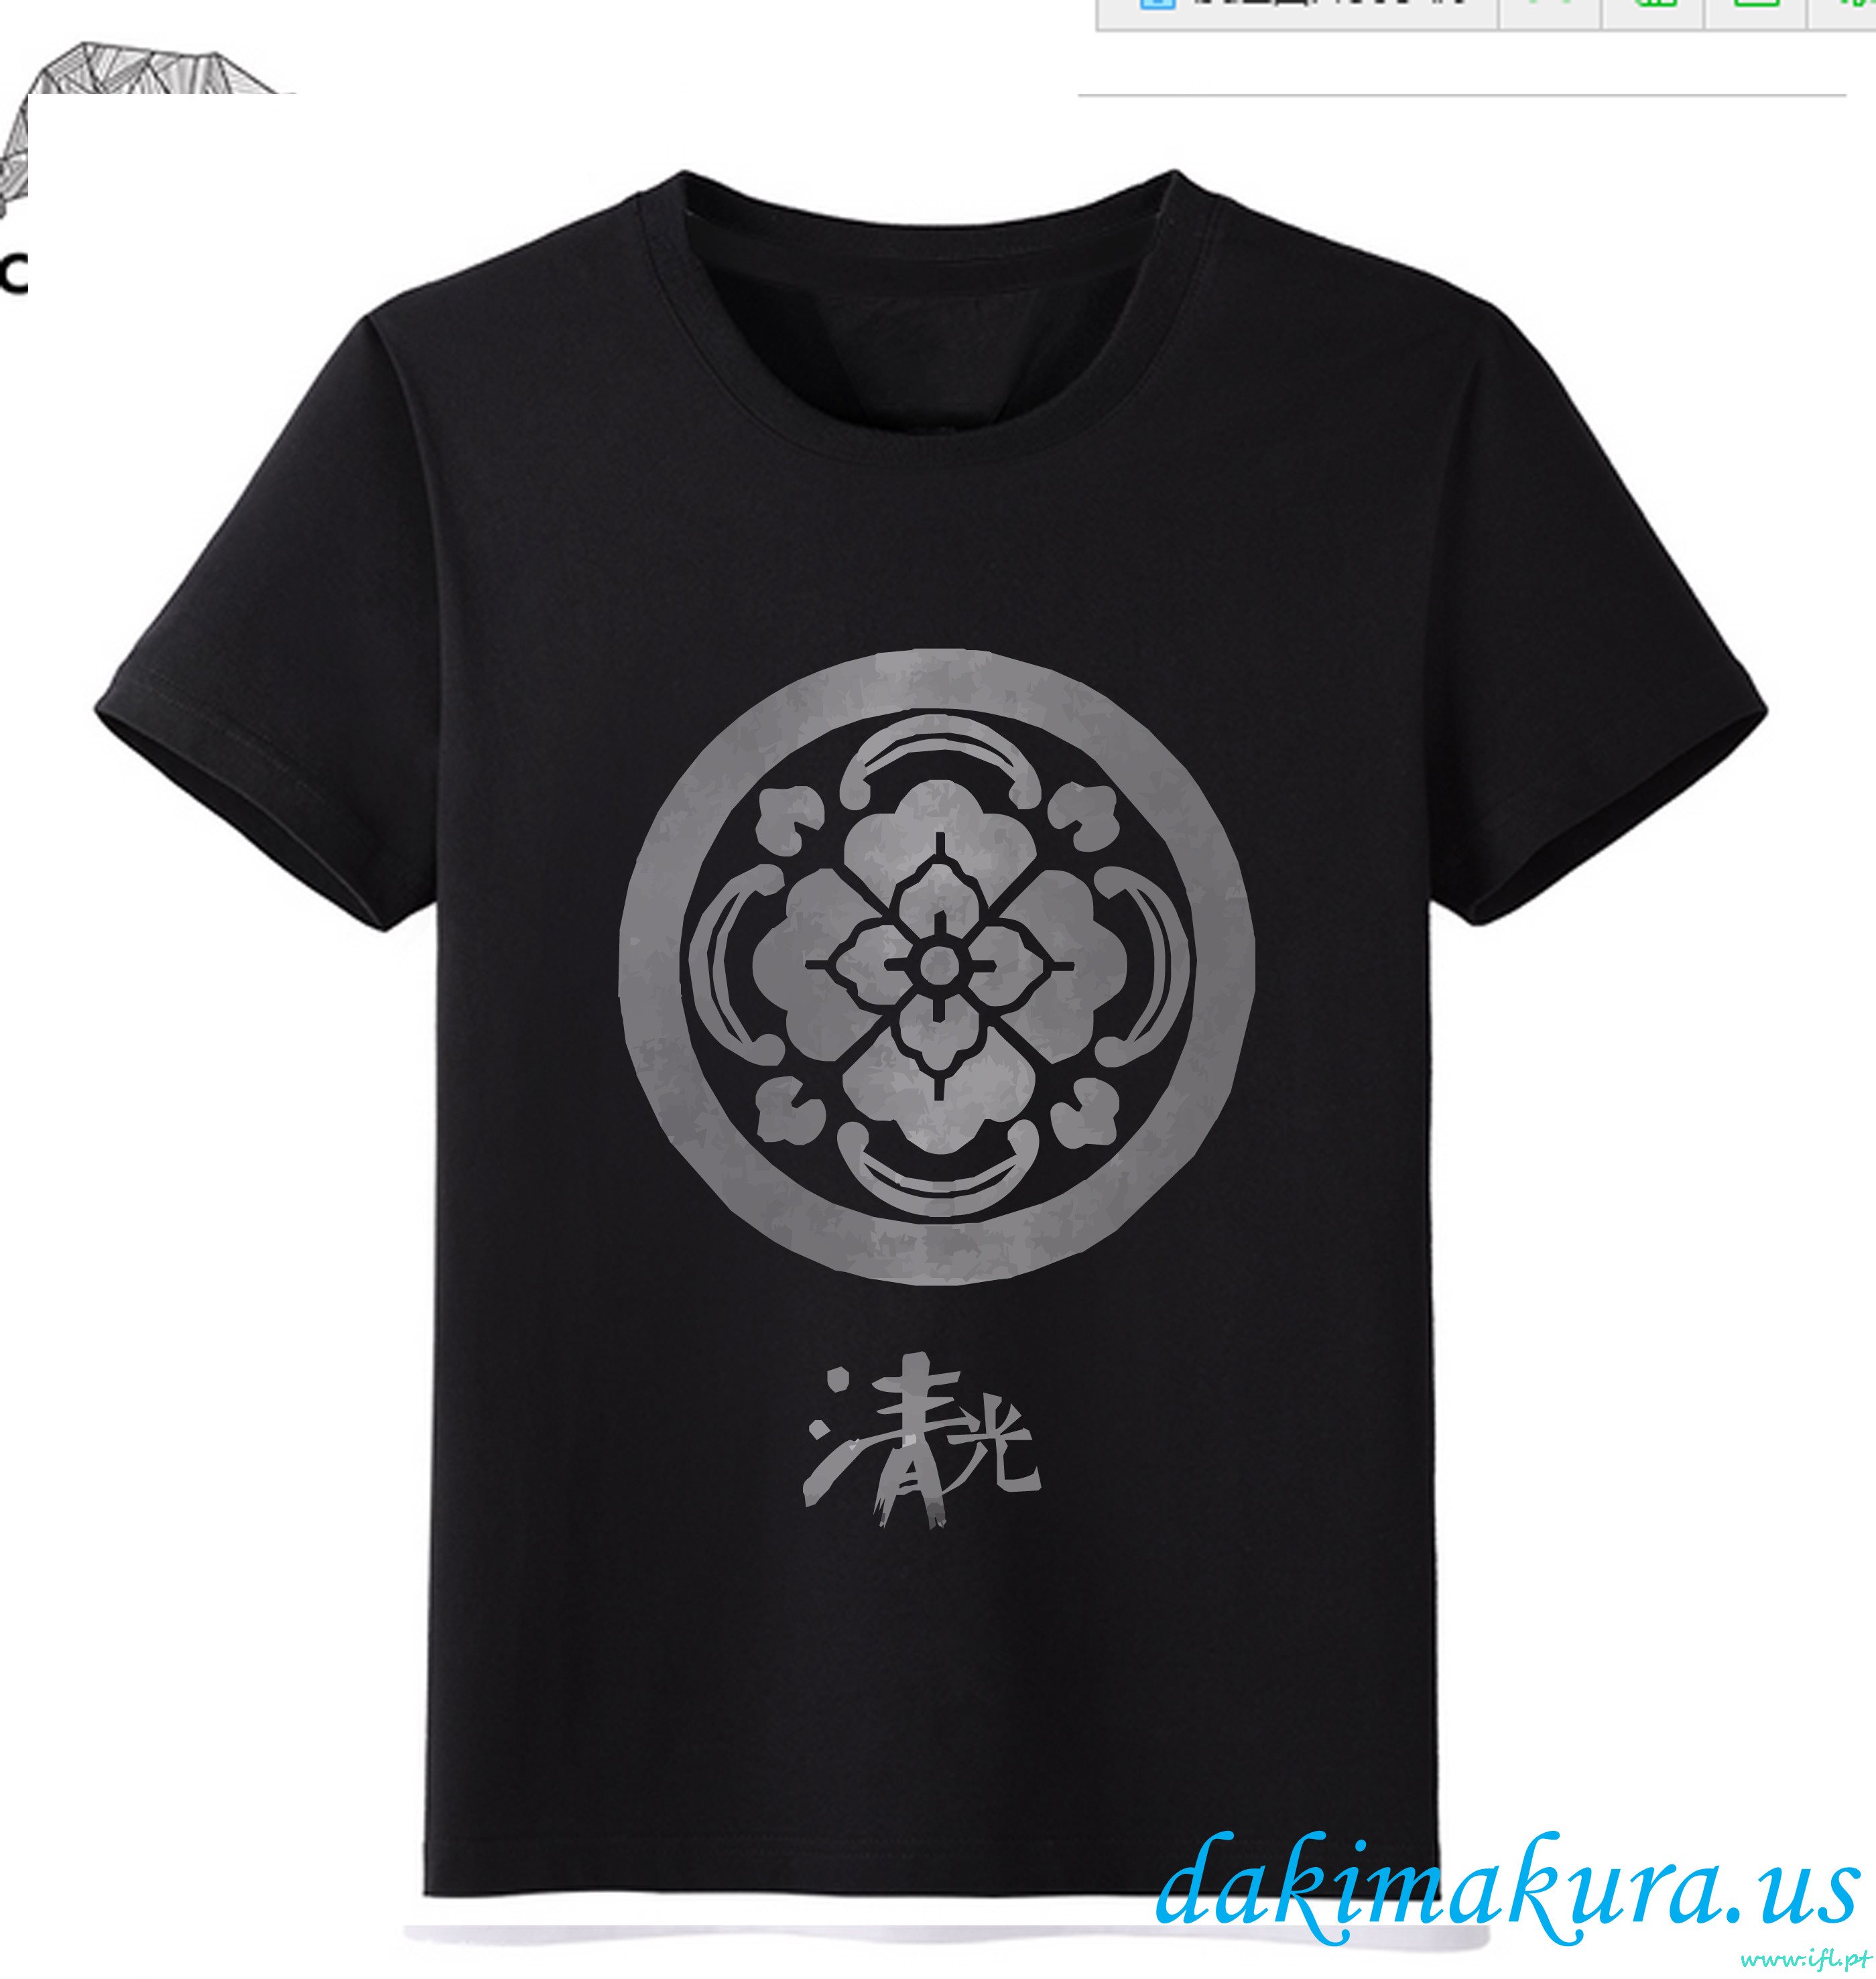 Billige Black-touken Ranbu Online Mænd Anime Mode T-shirts Fra Kina Fabrik